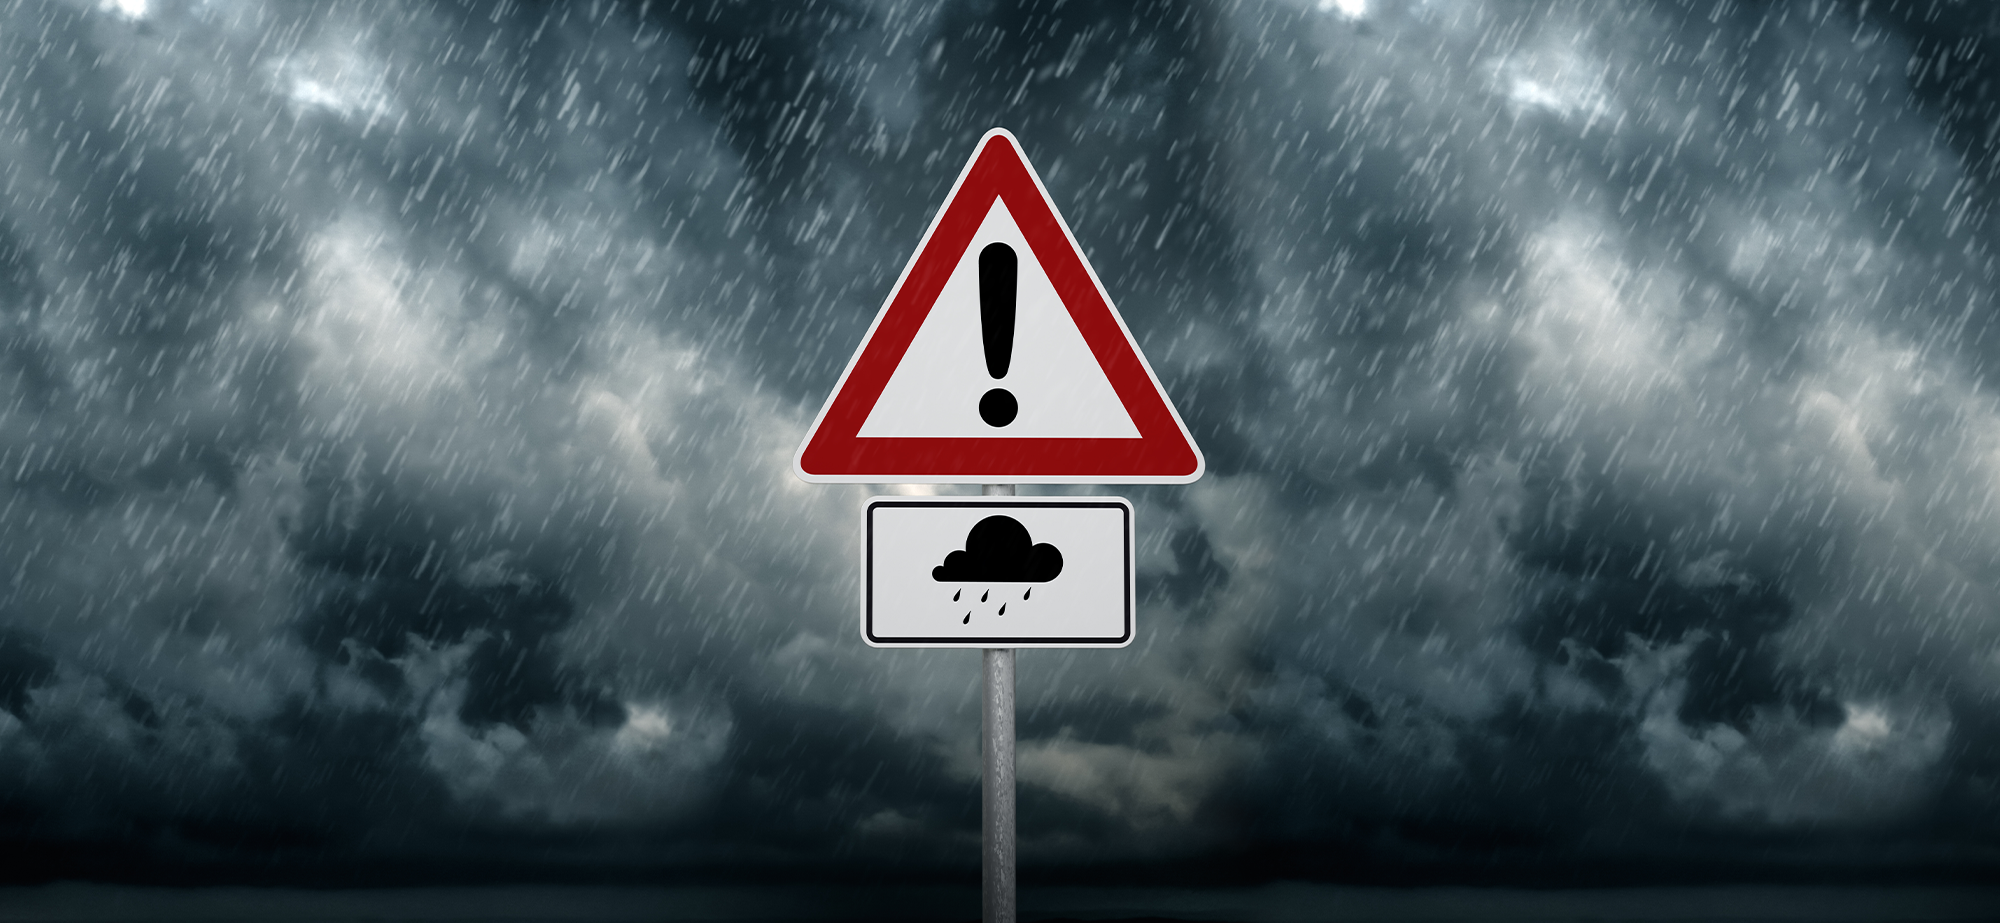 Prefeitura de Atalaia auxilia moradores afetados pelas fortes chuvas: “garantir a segurança de todos”